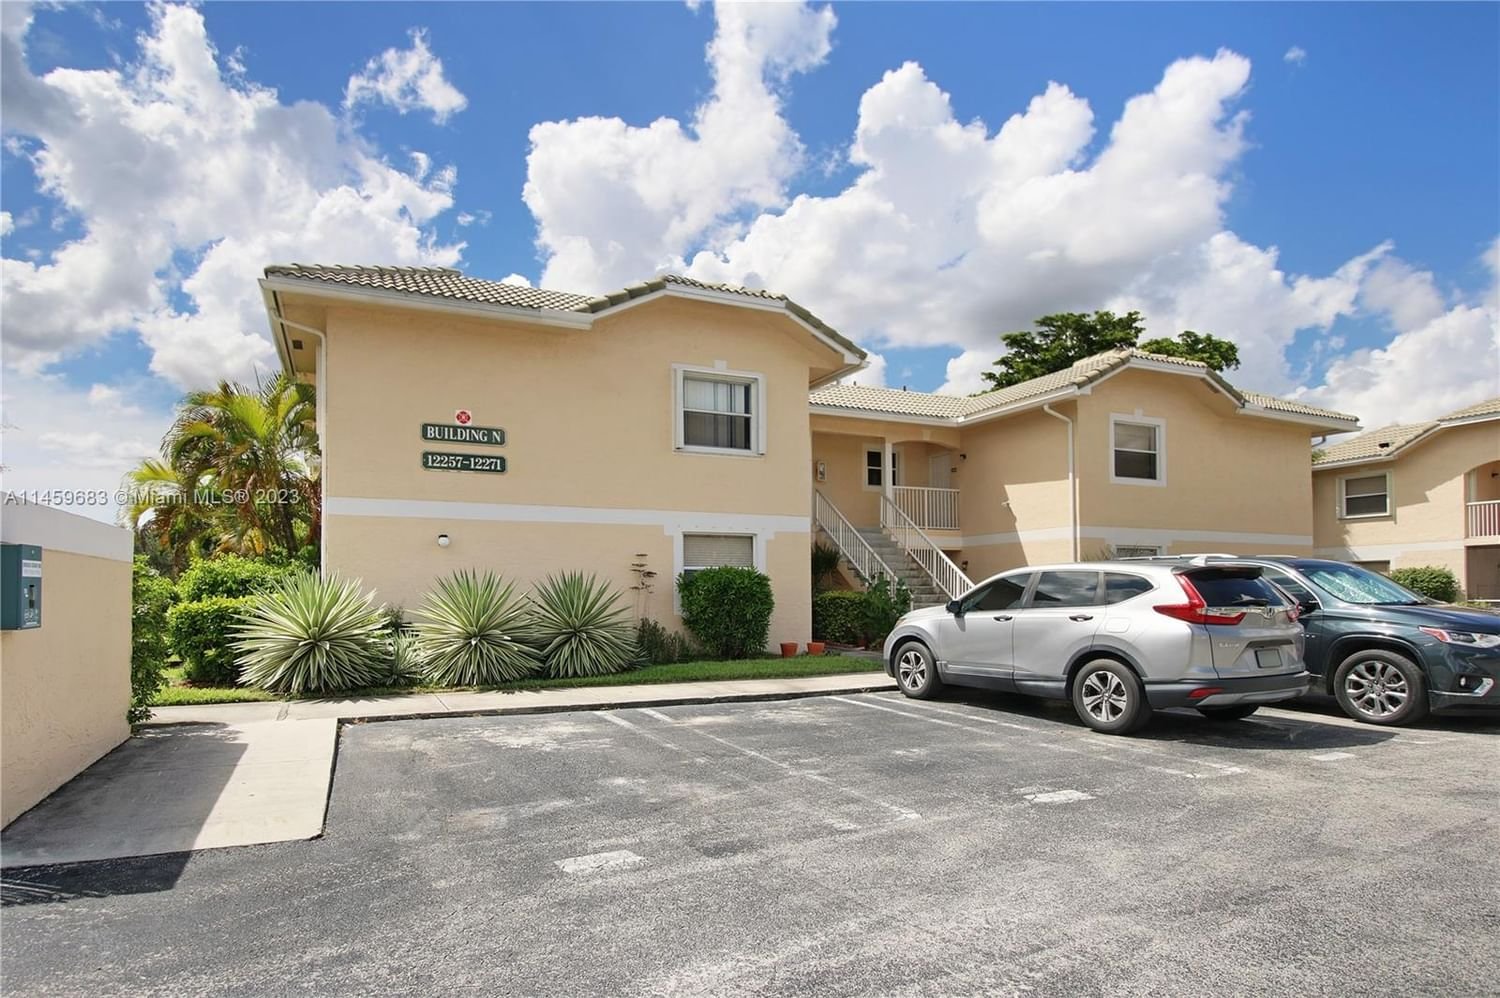 Real estate property located at 12259 Royal Palm Blvd #2N, Broward County, ROYAL GARDEN CONDO, Coral Springs, FL